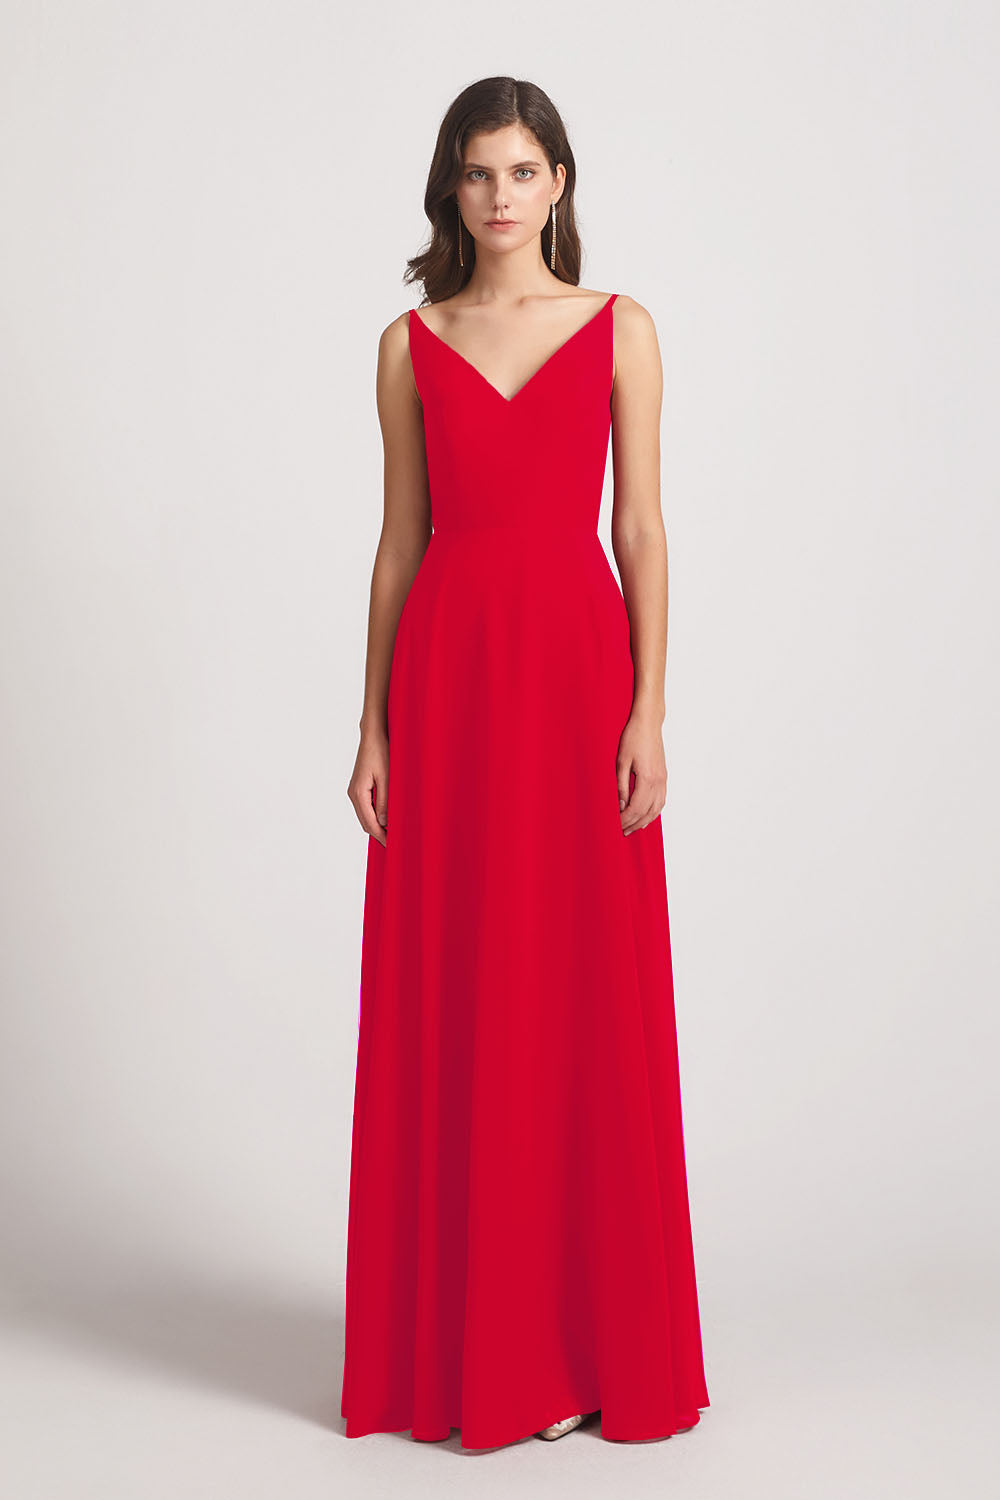 Alfa Bridal Red V-Neck Spaghetti Straps Chiffon Bridesmaid Dresses With Back Tie (AF0002)